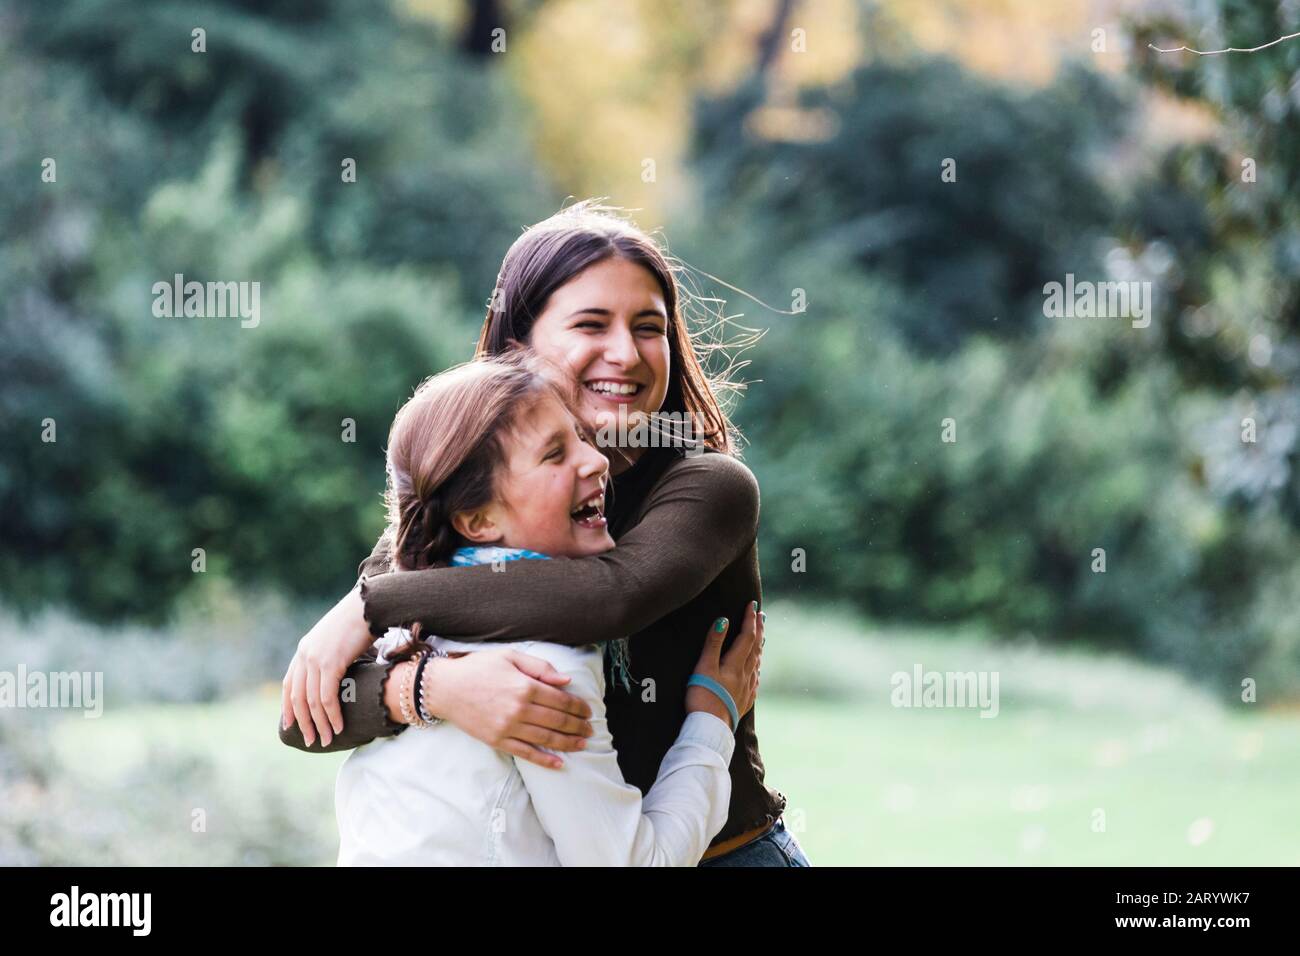 Sorelline sorridenti abbracciate da Bush Foto Stock